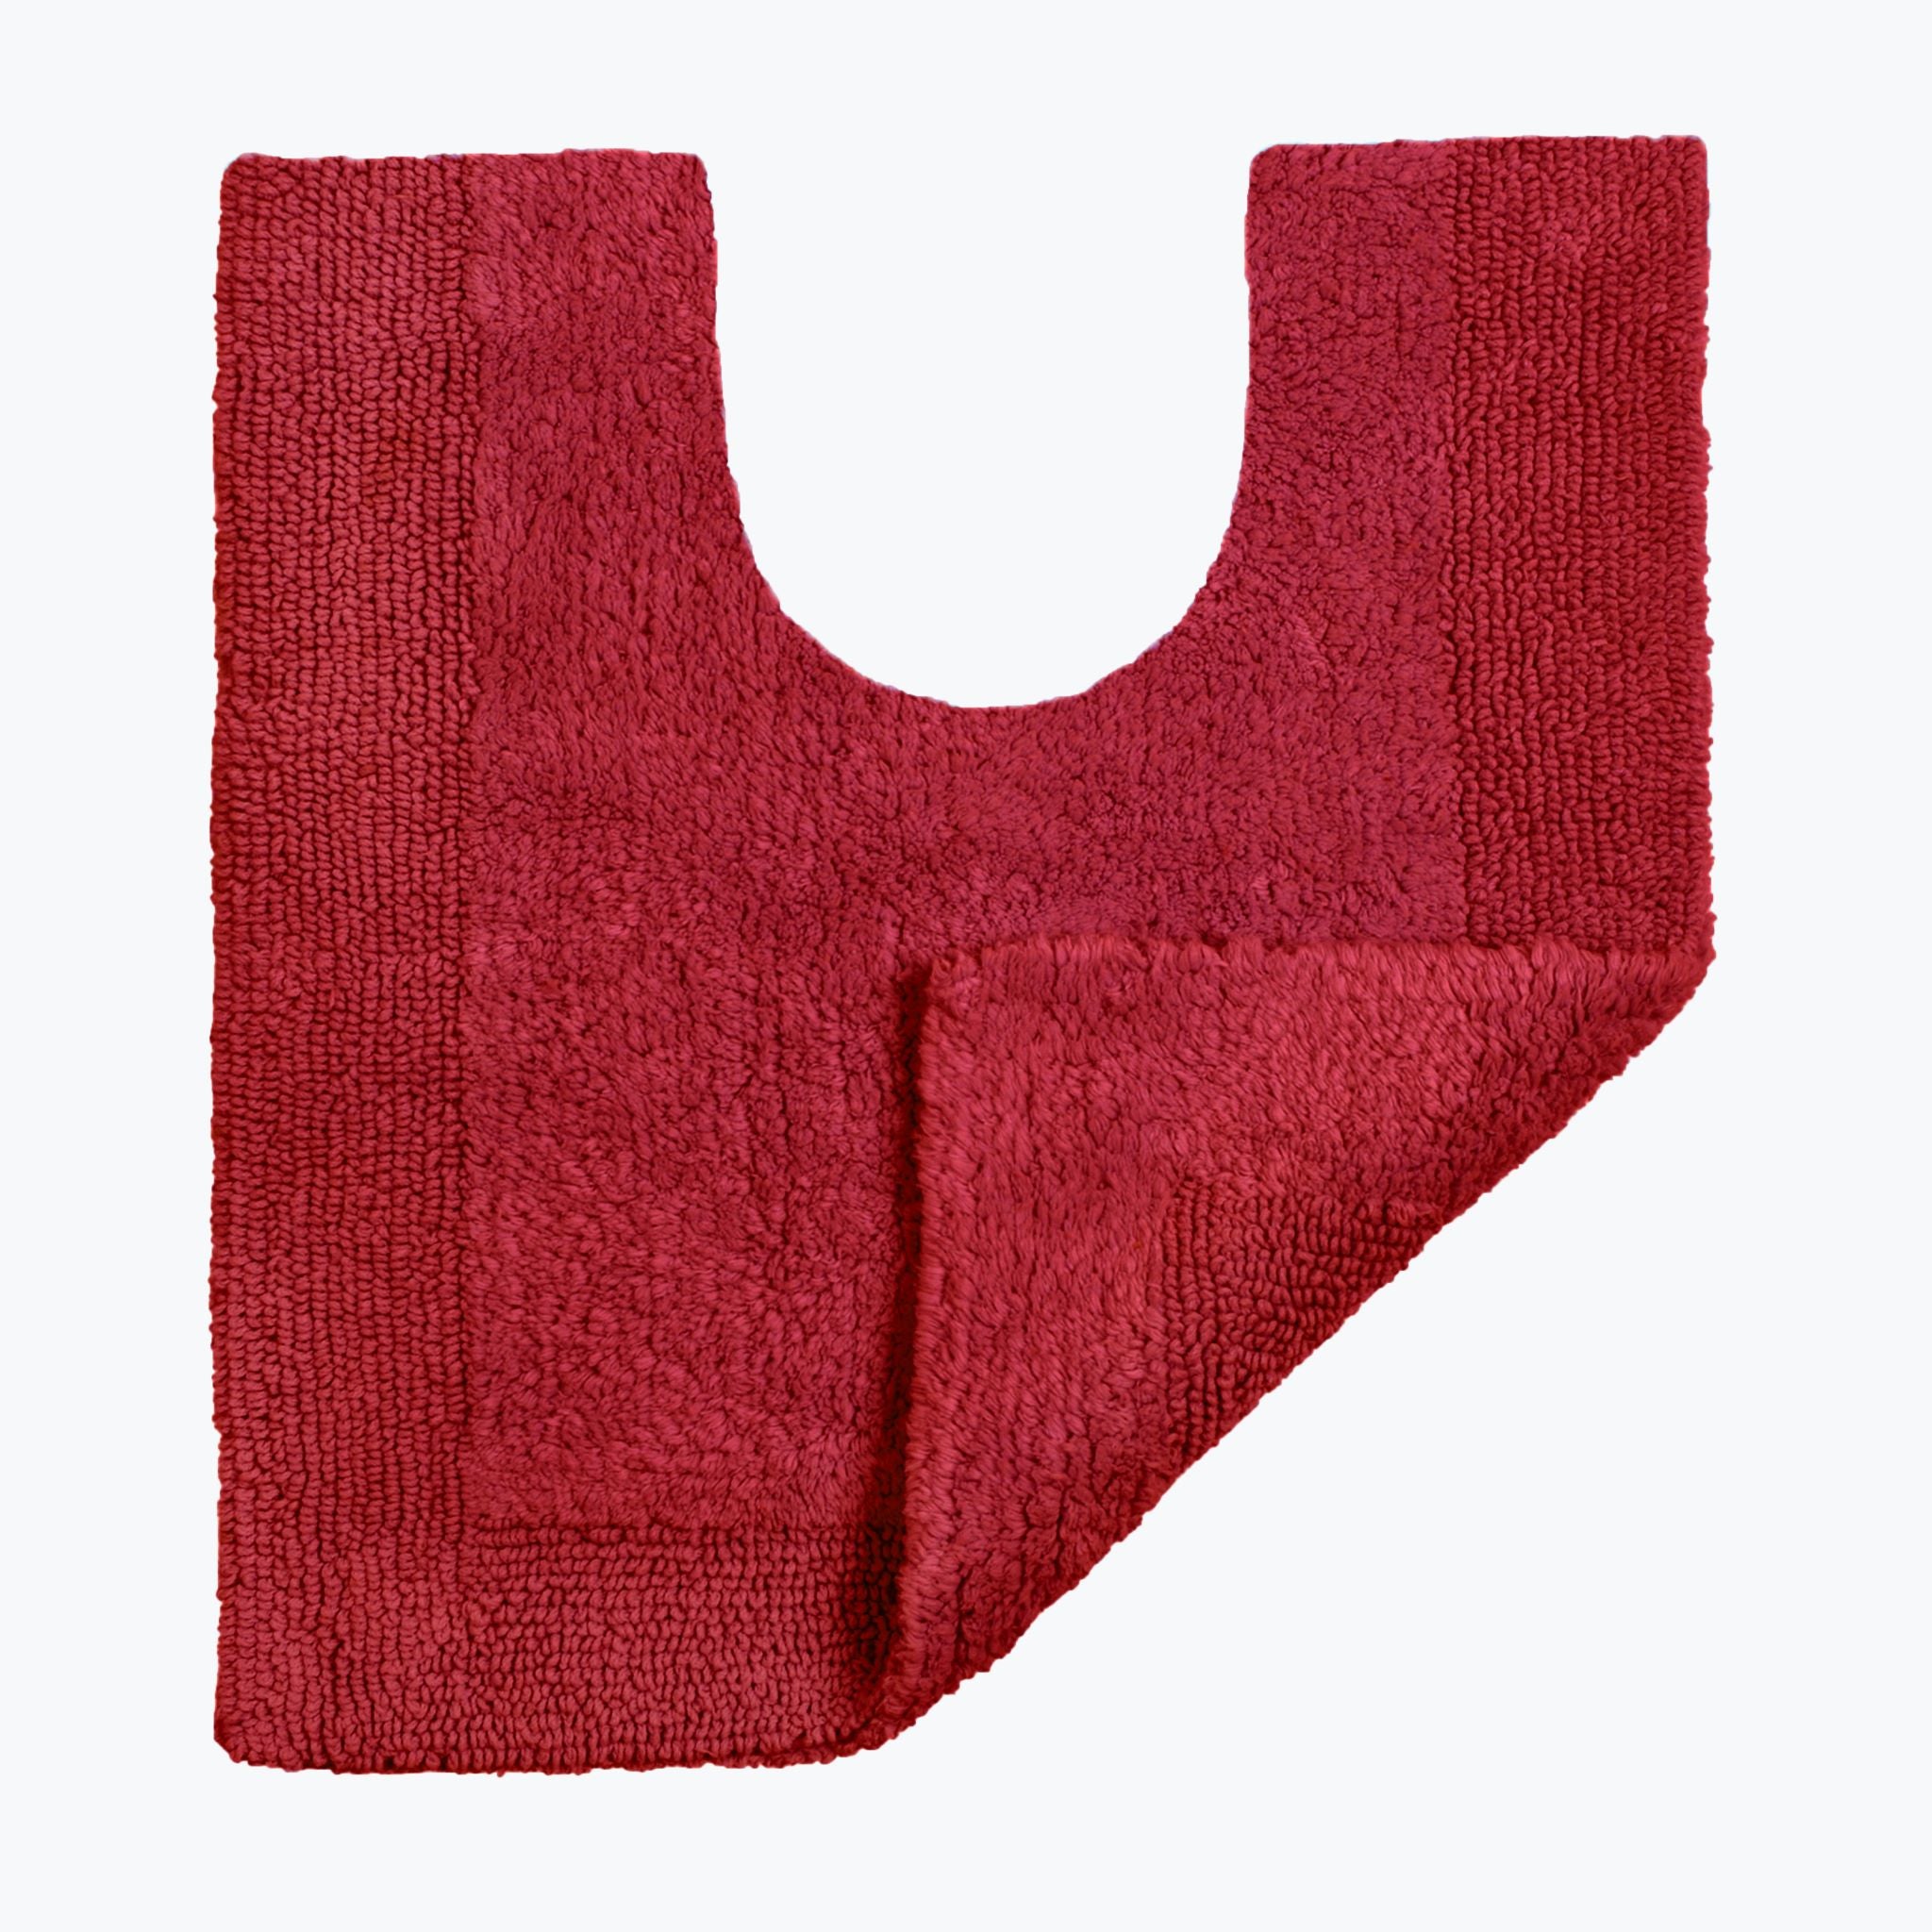 Cranberry Red Reversible Toilet Mat - Super Soft Cotton Pedestal Mat